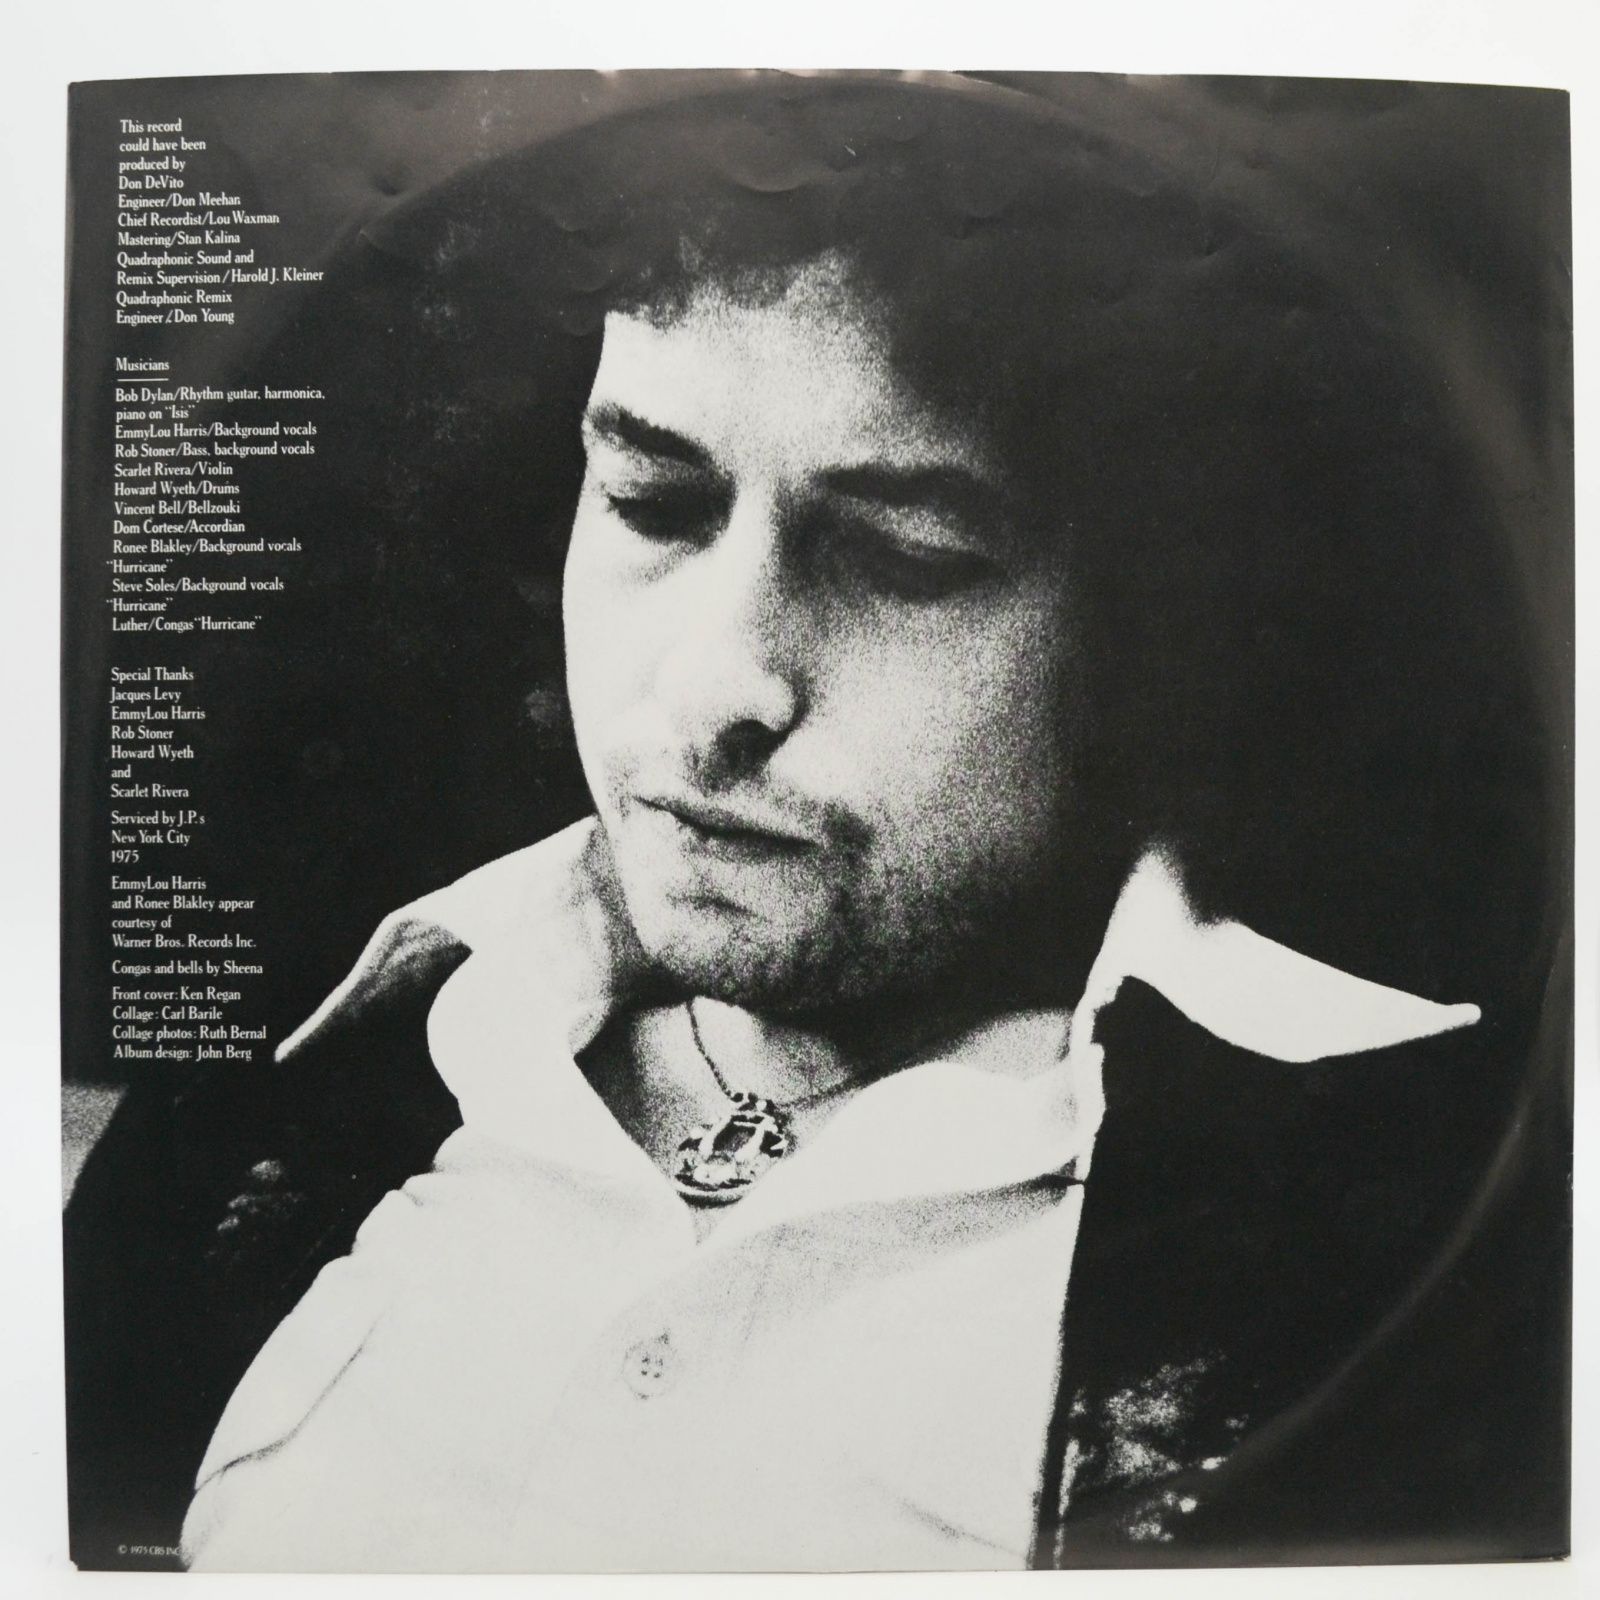 Bob Dylan — Desire, 1975